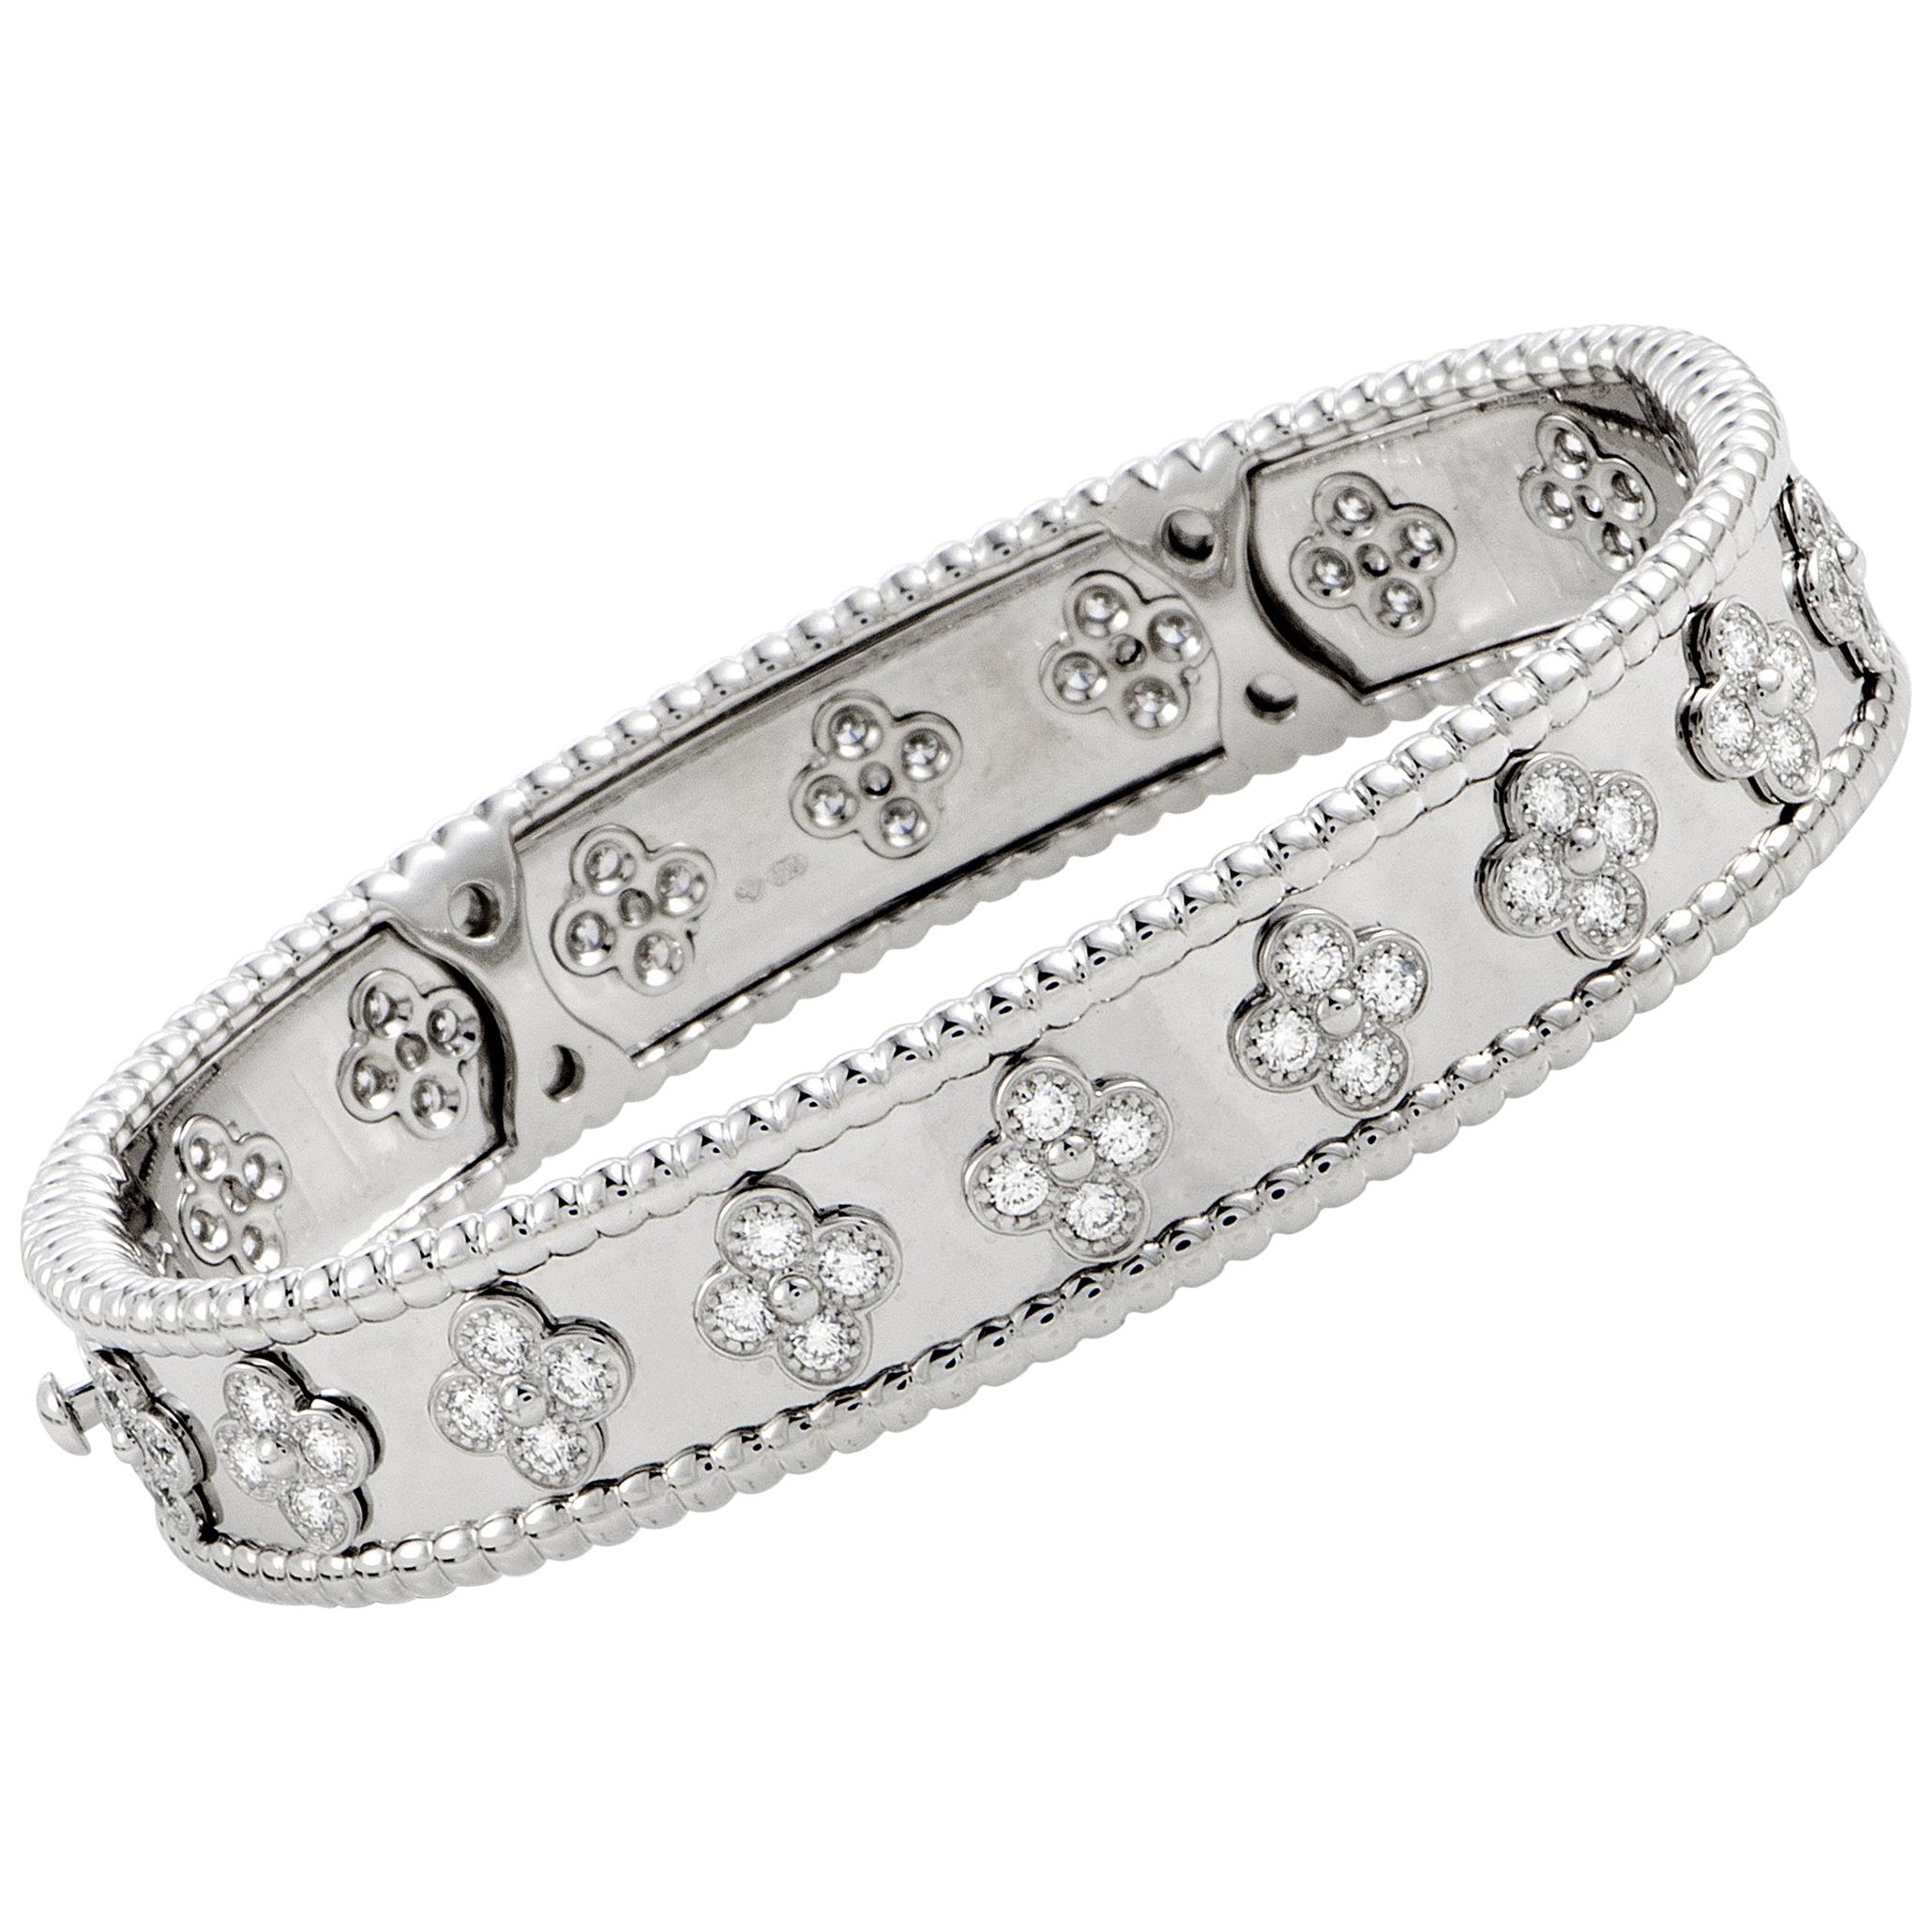 Van Cleef & Arpels Perlée 18 Karat White Gold Diamond Bangle Bracelet